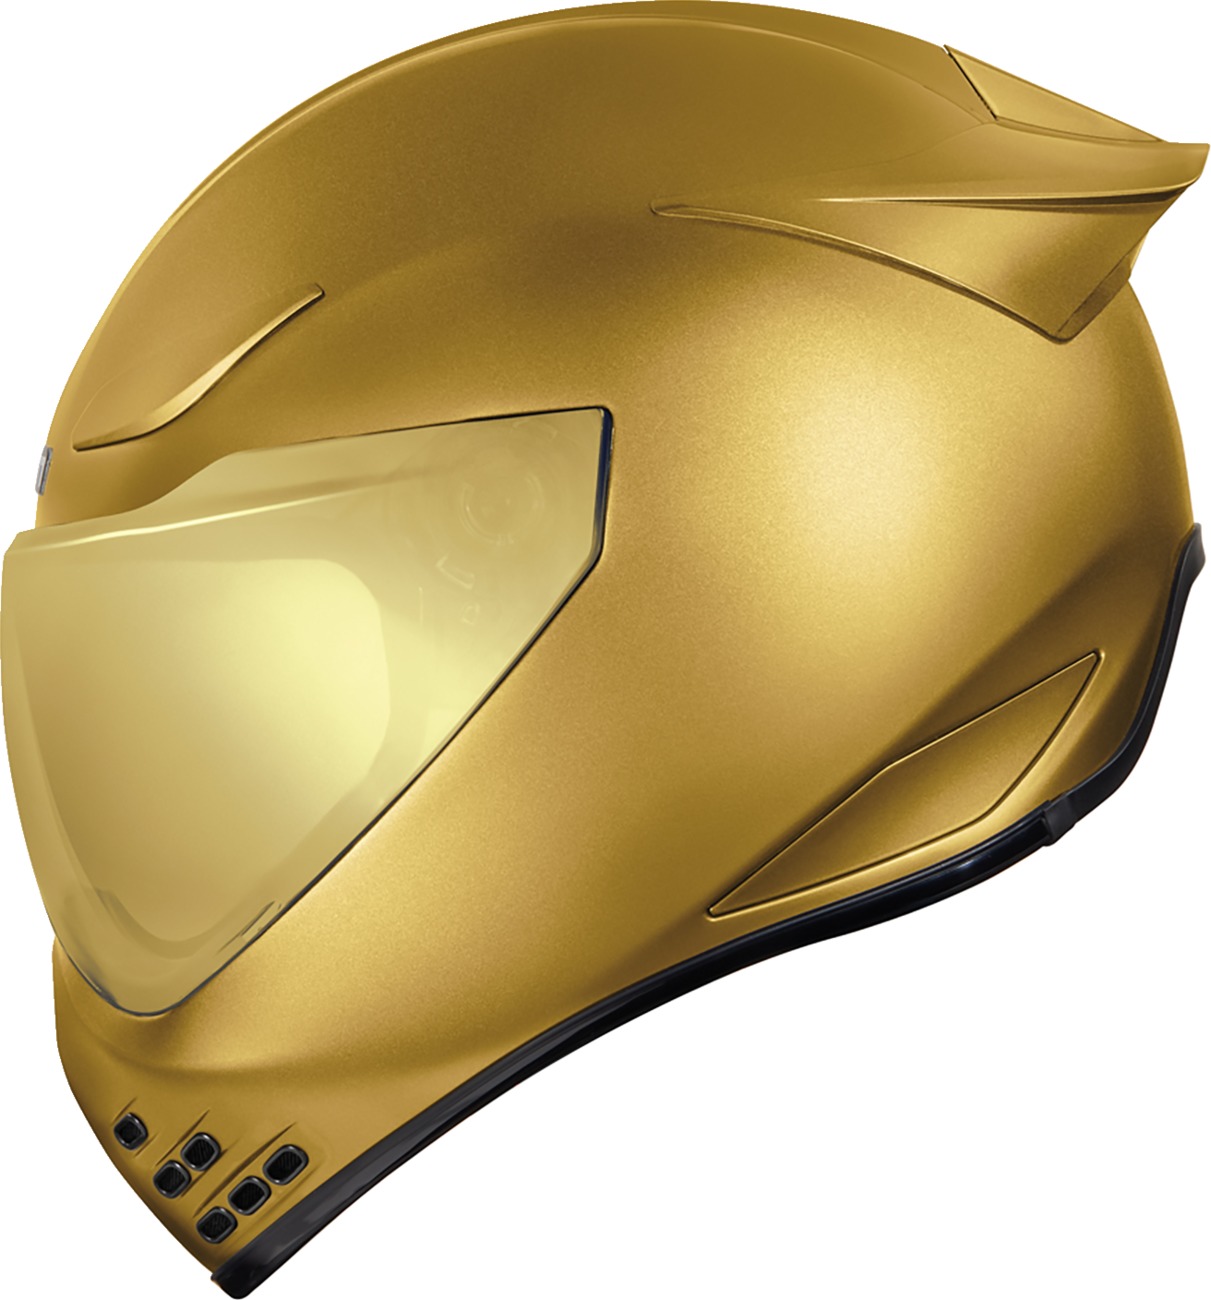 Domain Cornelius Helmet Gold Large - Click Image to Close